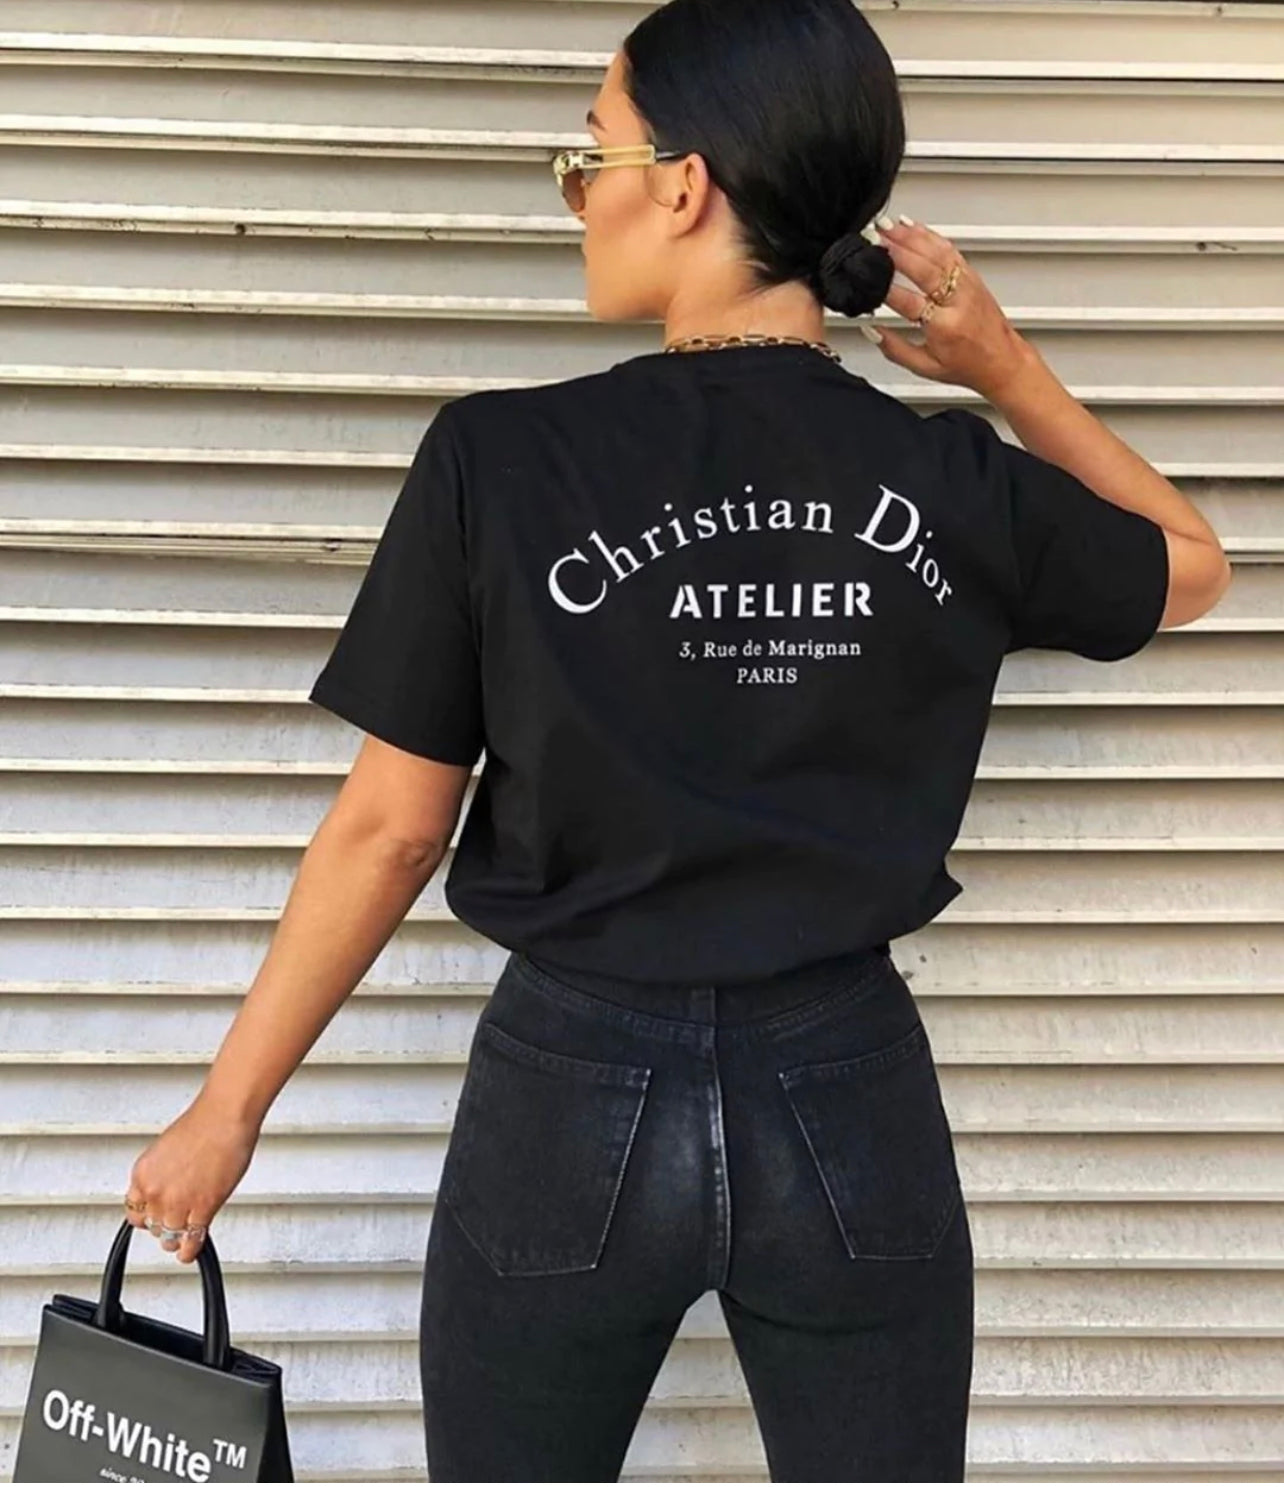 Christian Dior Atelier T-Shirt – CnExclusives